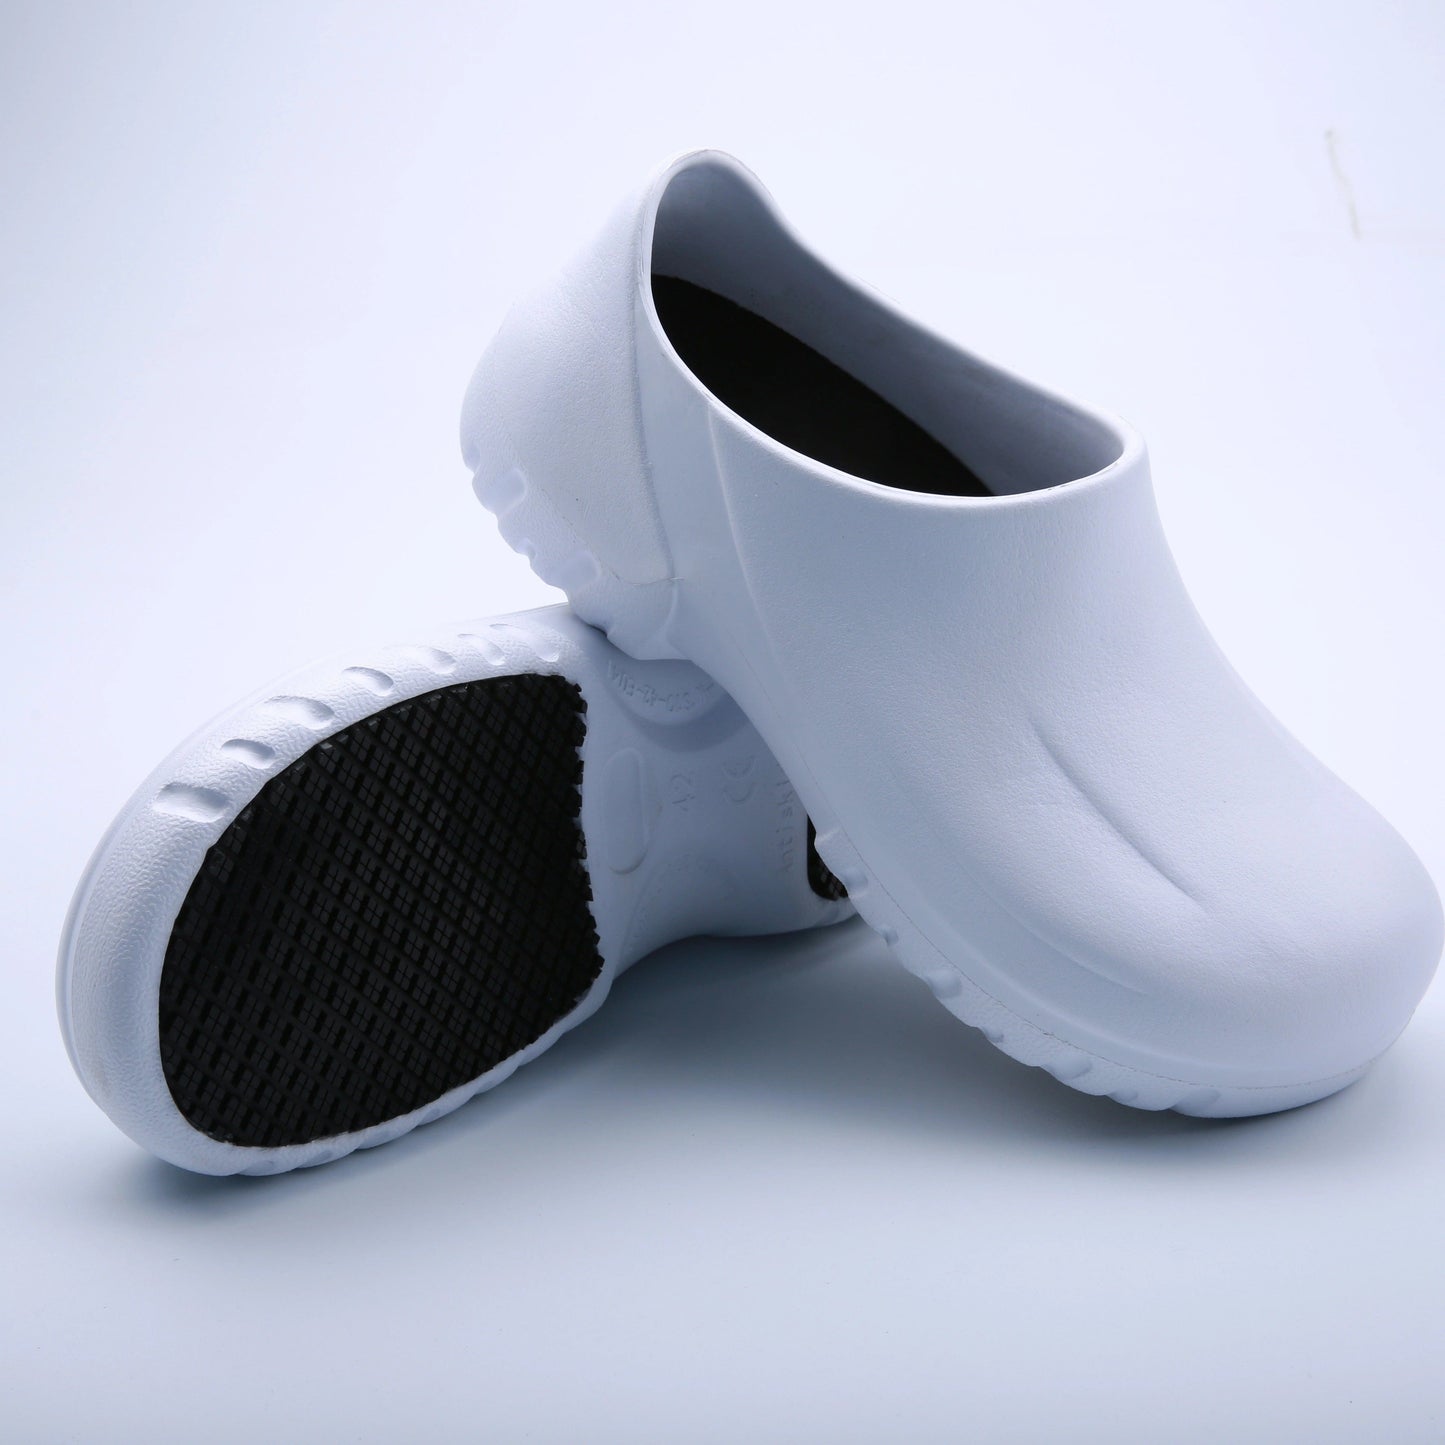 Men's Solid EVA Chef Shoes, Comfy Non Slip Waterproof Slip On Work Shoes, Men's Footwear